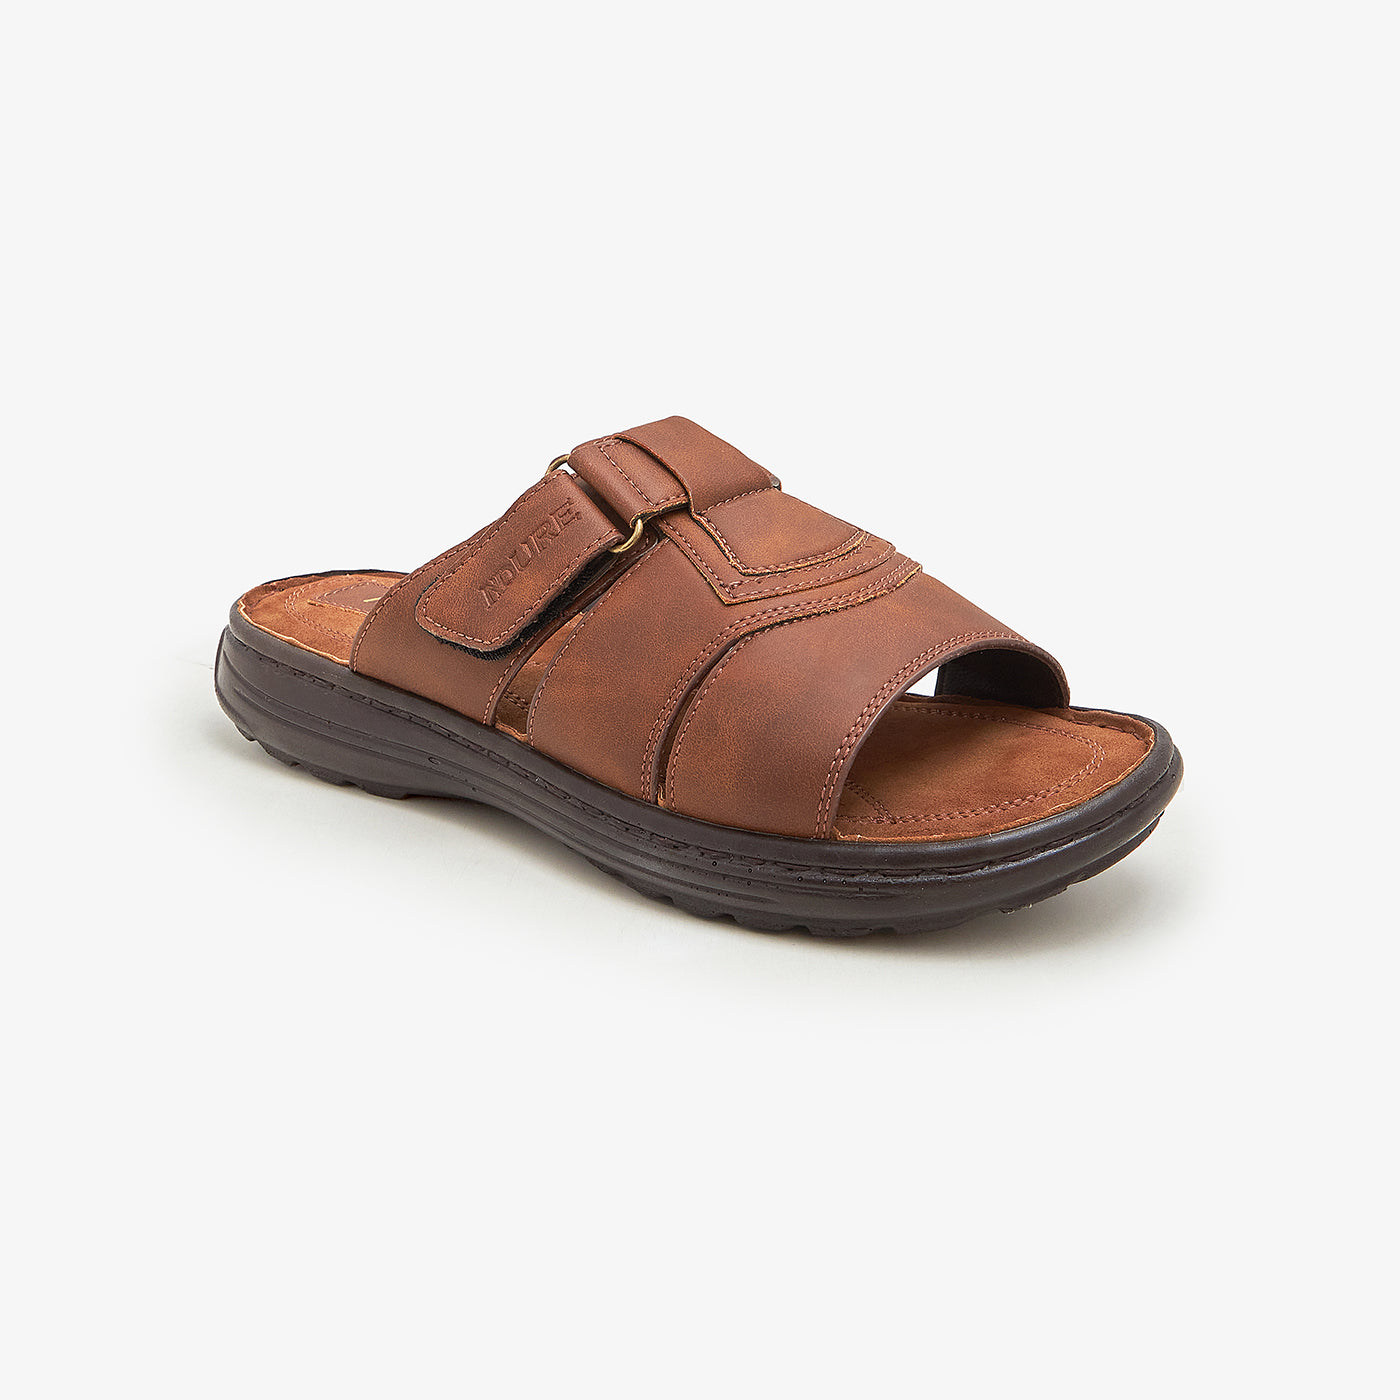 Buy Men Sandals & Peshawaris - Men's Chappals M-PL-KOD-0018 – Ndure.com